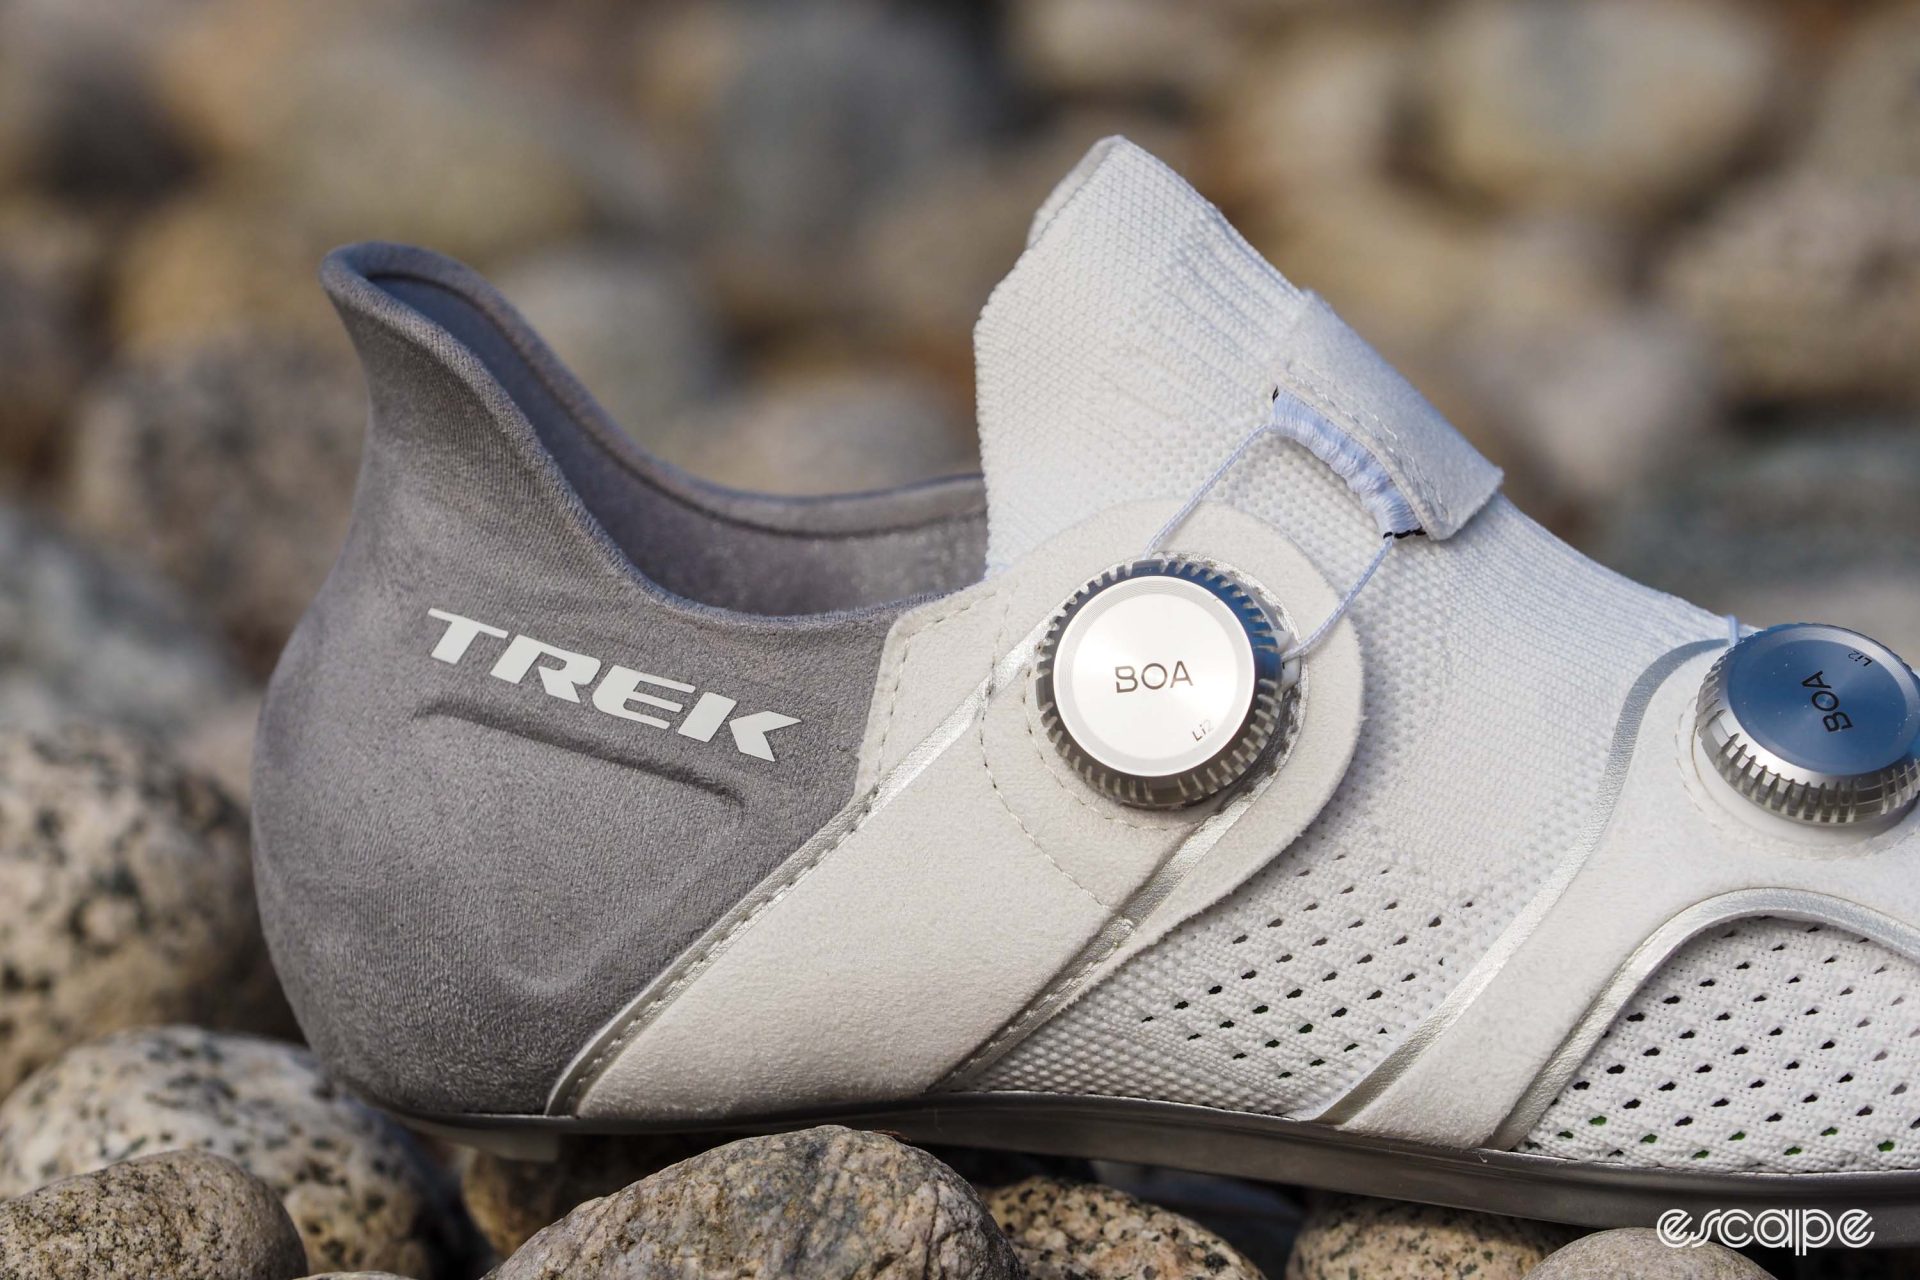 Trek RSL Knit shoe review: A custom fit from an off-the-shelf shoe 